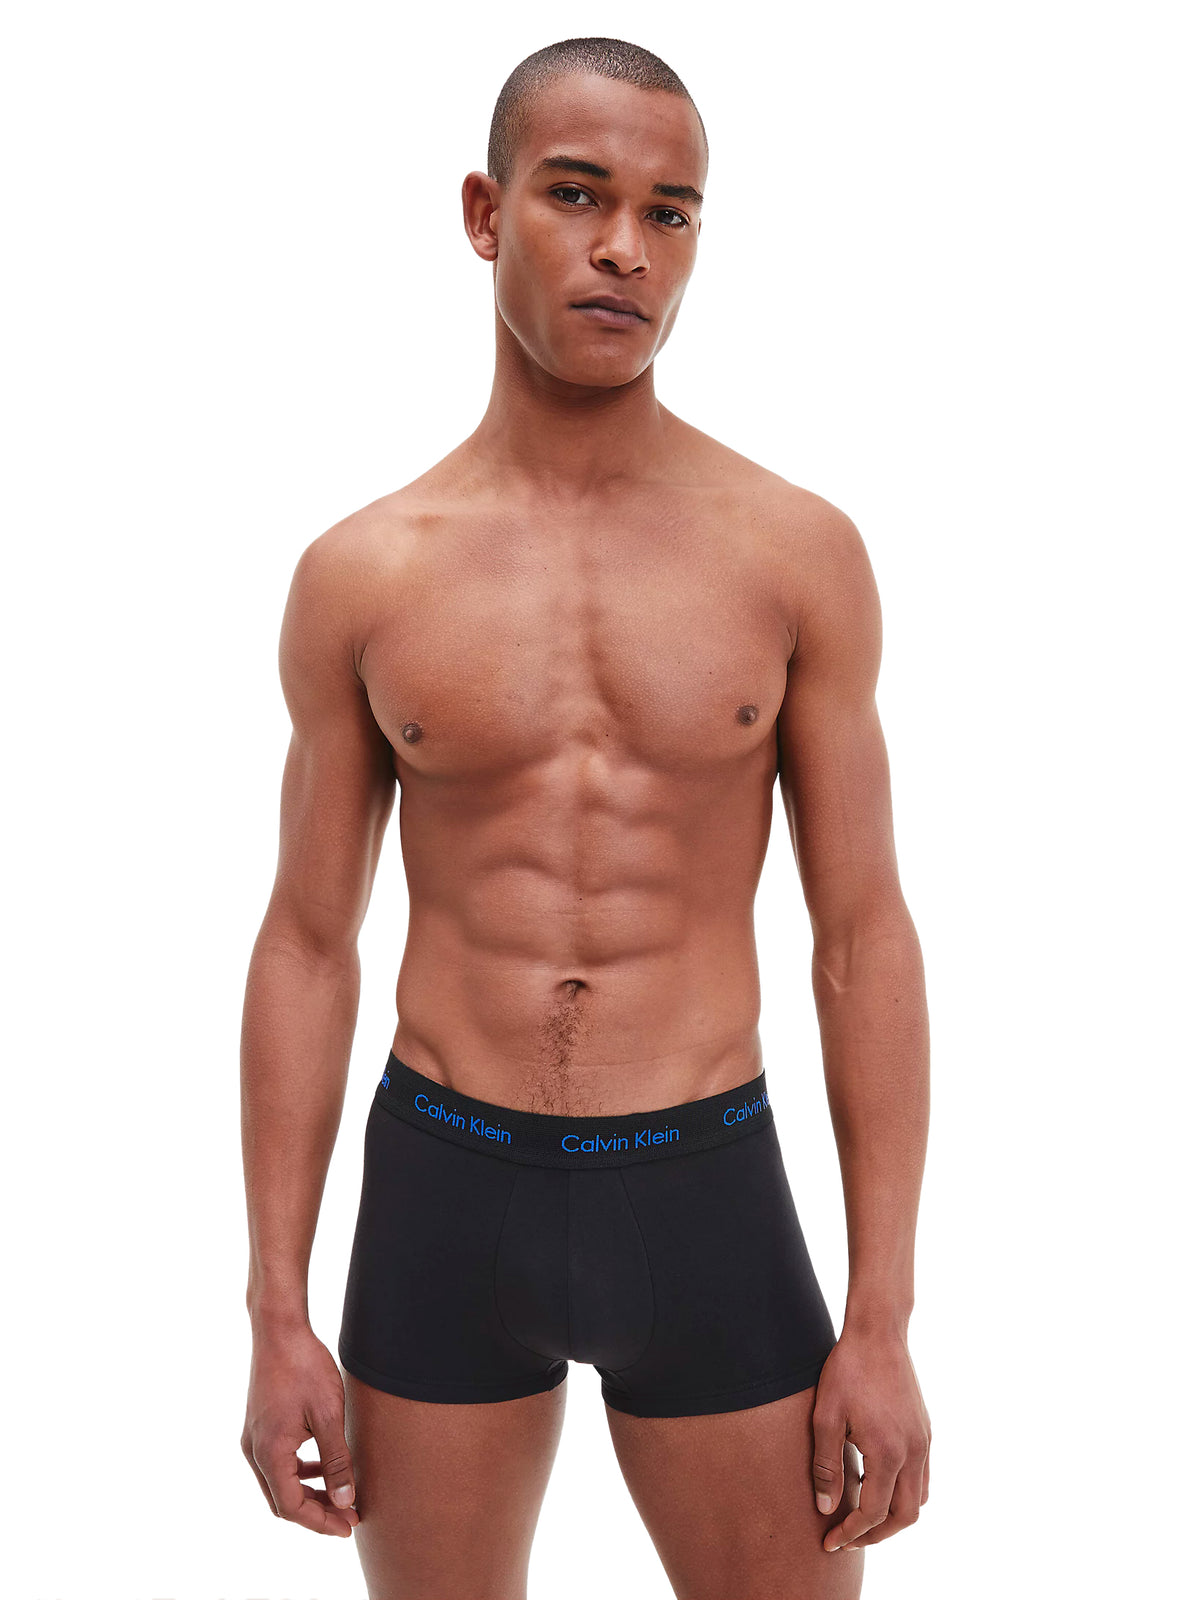 Mens Calvin Klein Boxer Shorts Low Rise Trunks 3 Pack, 04, U2664G, B-Groovy Plum/Bright Rose/Blue Logo